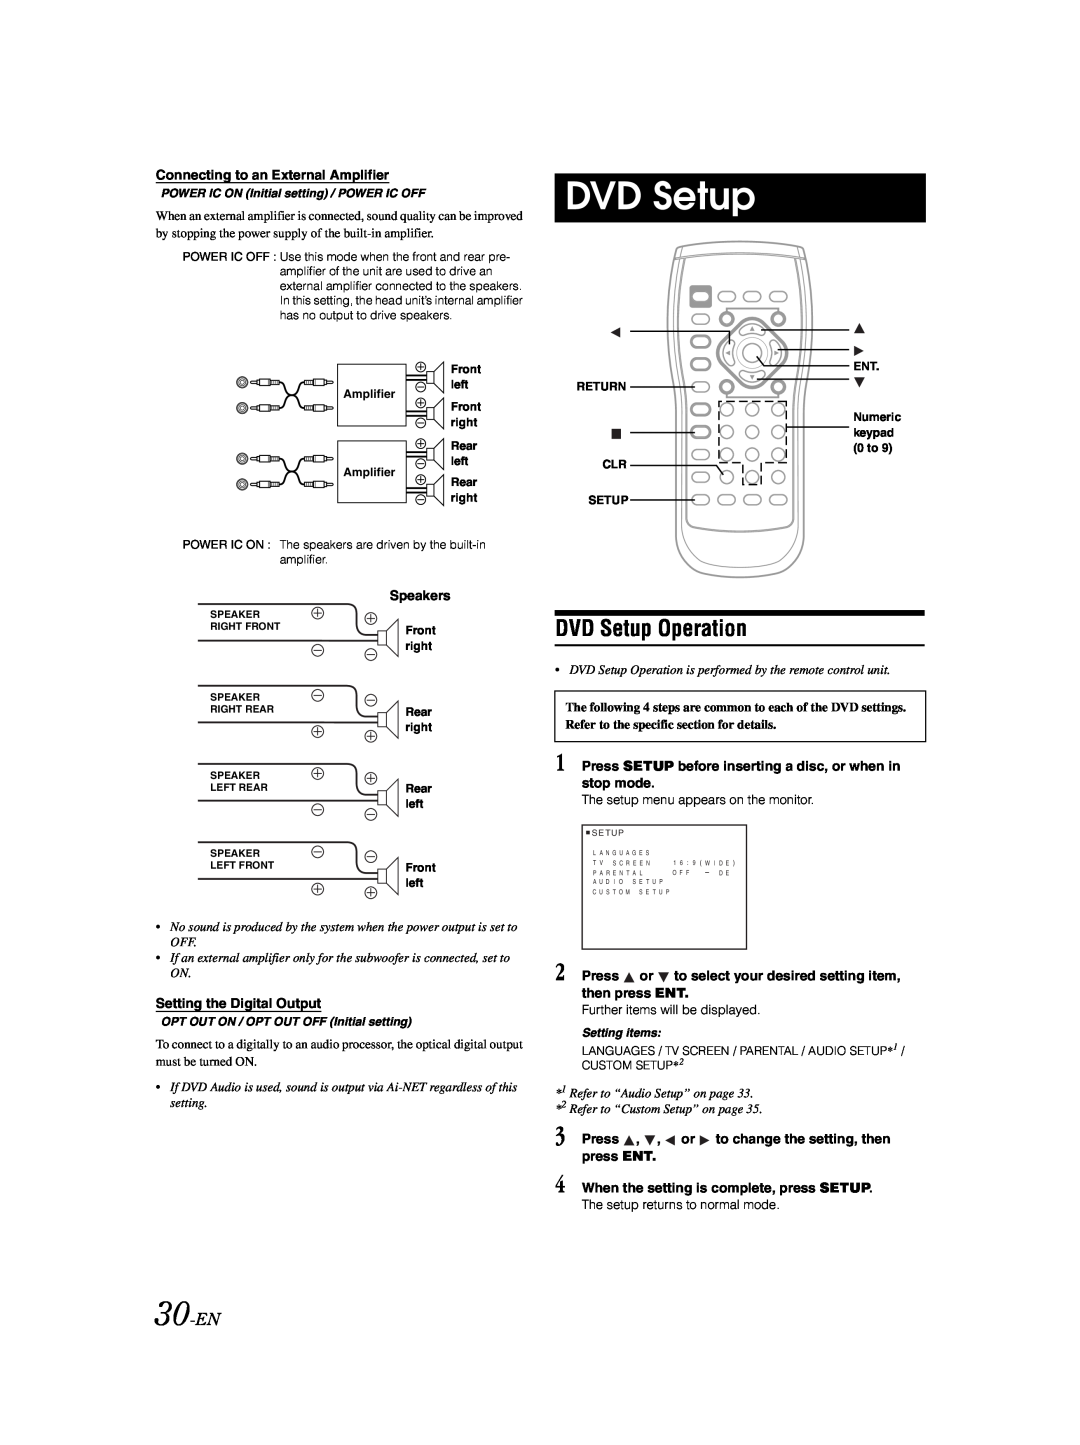 Alpine DVA-9861Ri owner manual DVD Setup Operation, 30-EN 